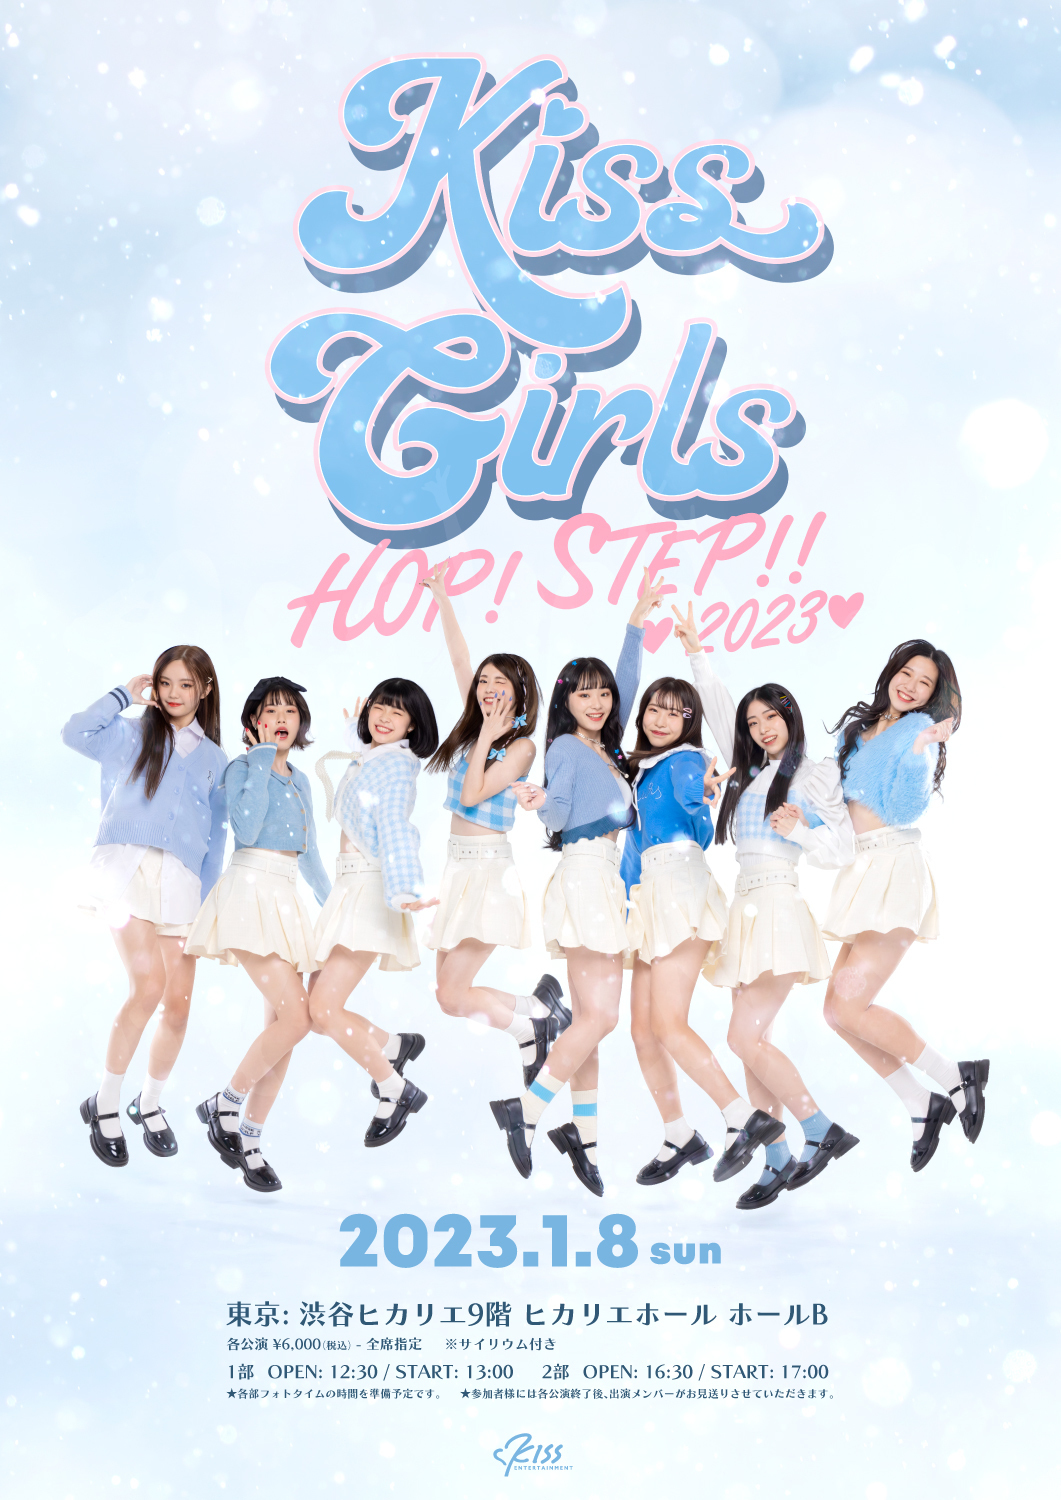 KISS GIRL'S HOP! STEP!! 💖2023💖開催 | キッスエンタ.jp